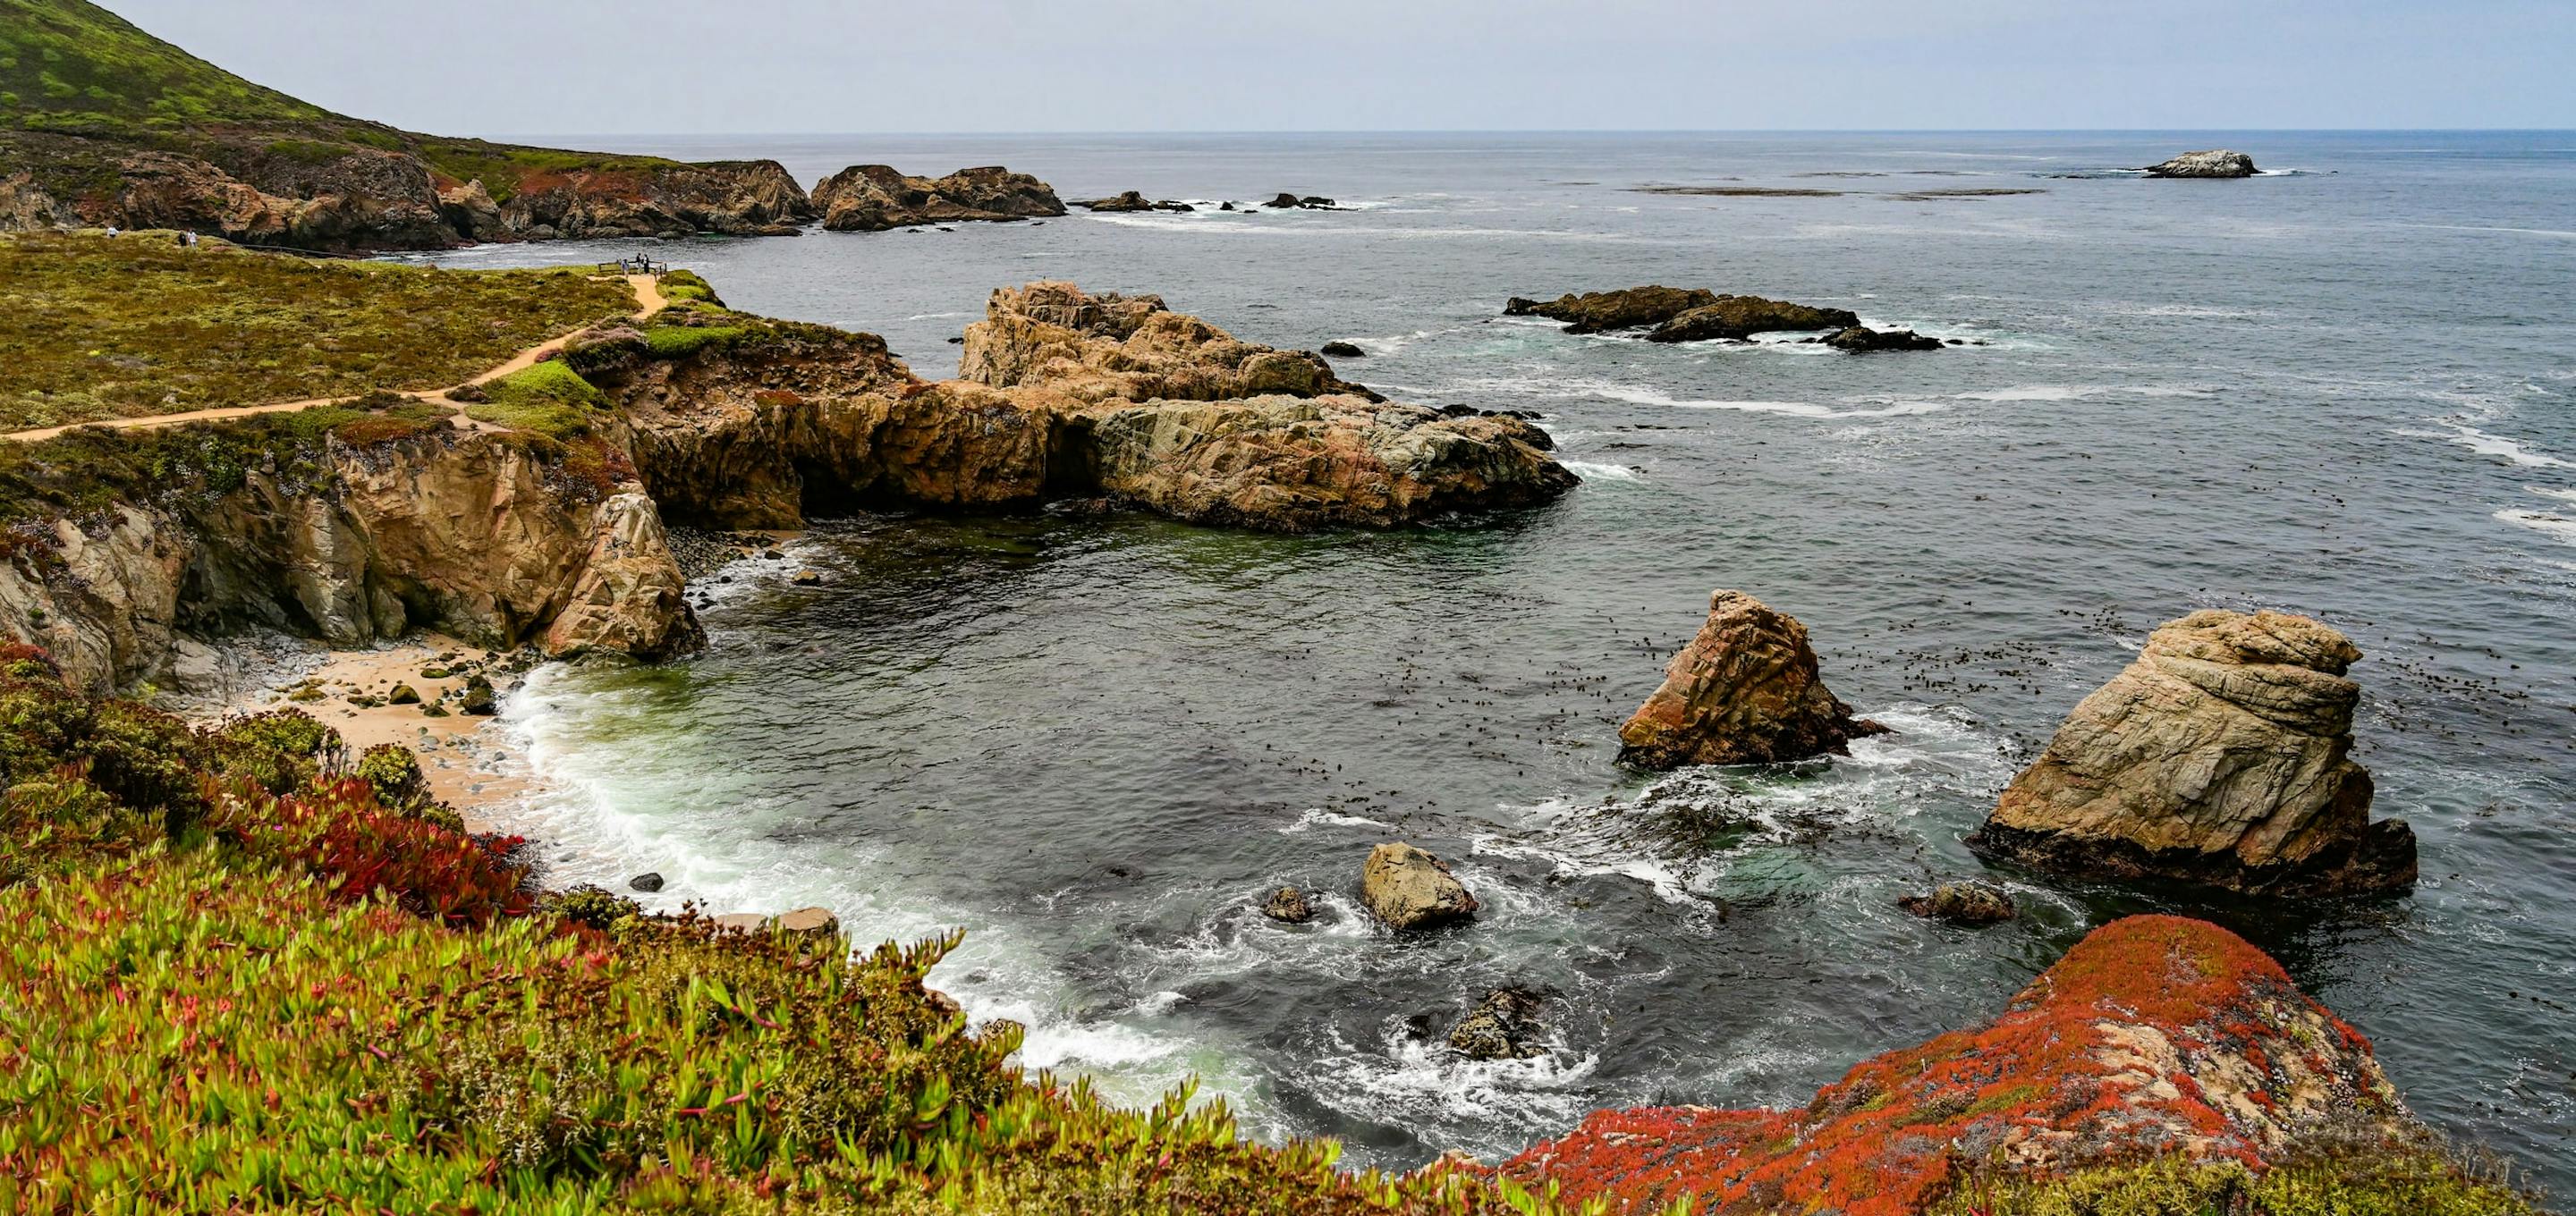 A coastal view of plants, rocks and wildlife